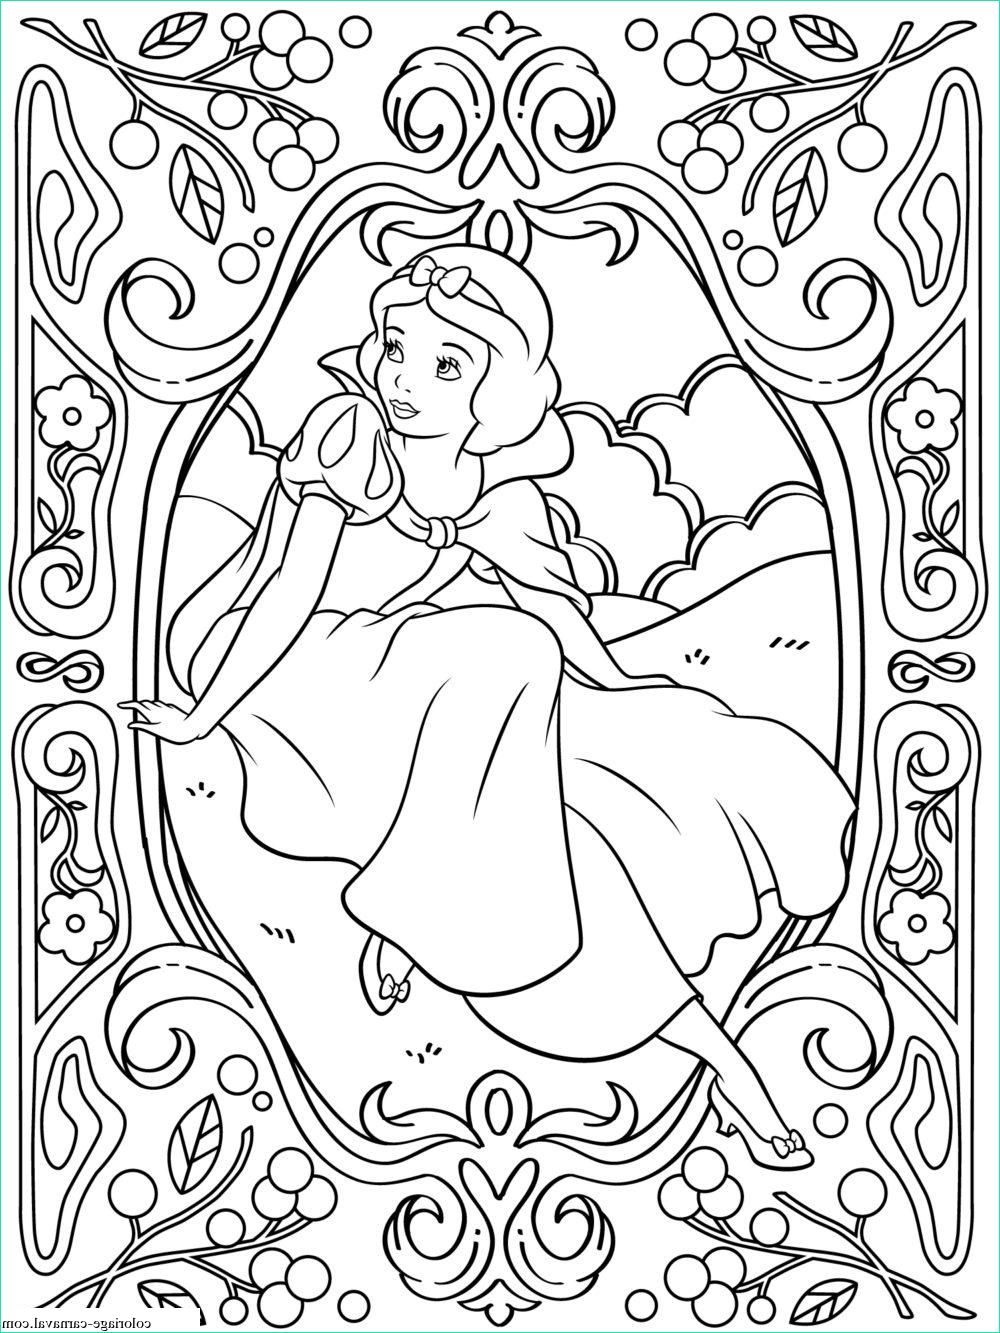 Coloriage Mandala De Princesse à Imprimer Beau Image Coloriage Mandala Disney Princesse Blanche Neige Dessin